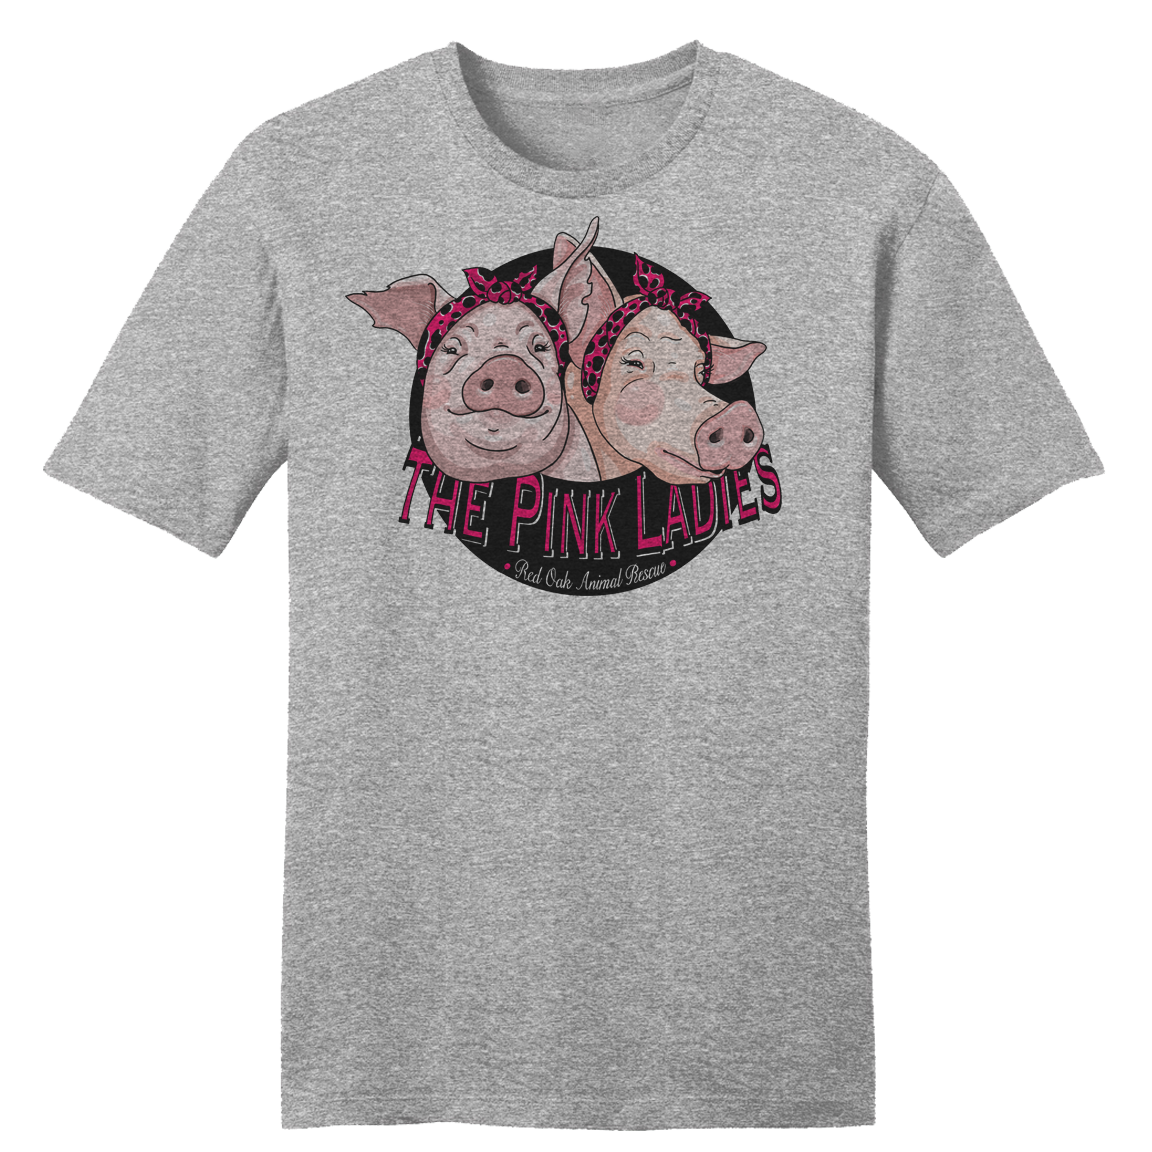 Pink Ladies - Red Oak Animal Rescue Fundraiser Tee - Cincy Shirts